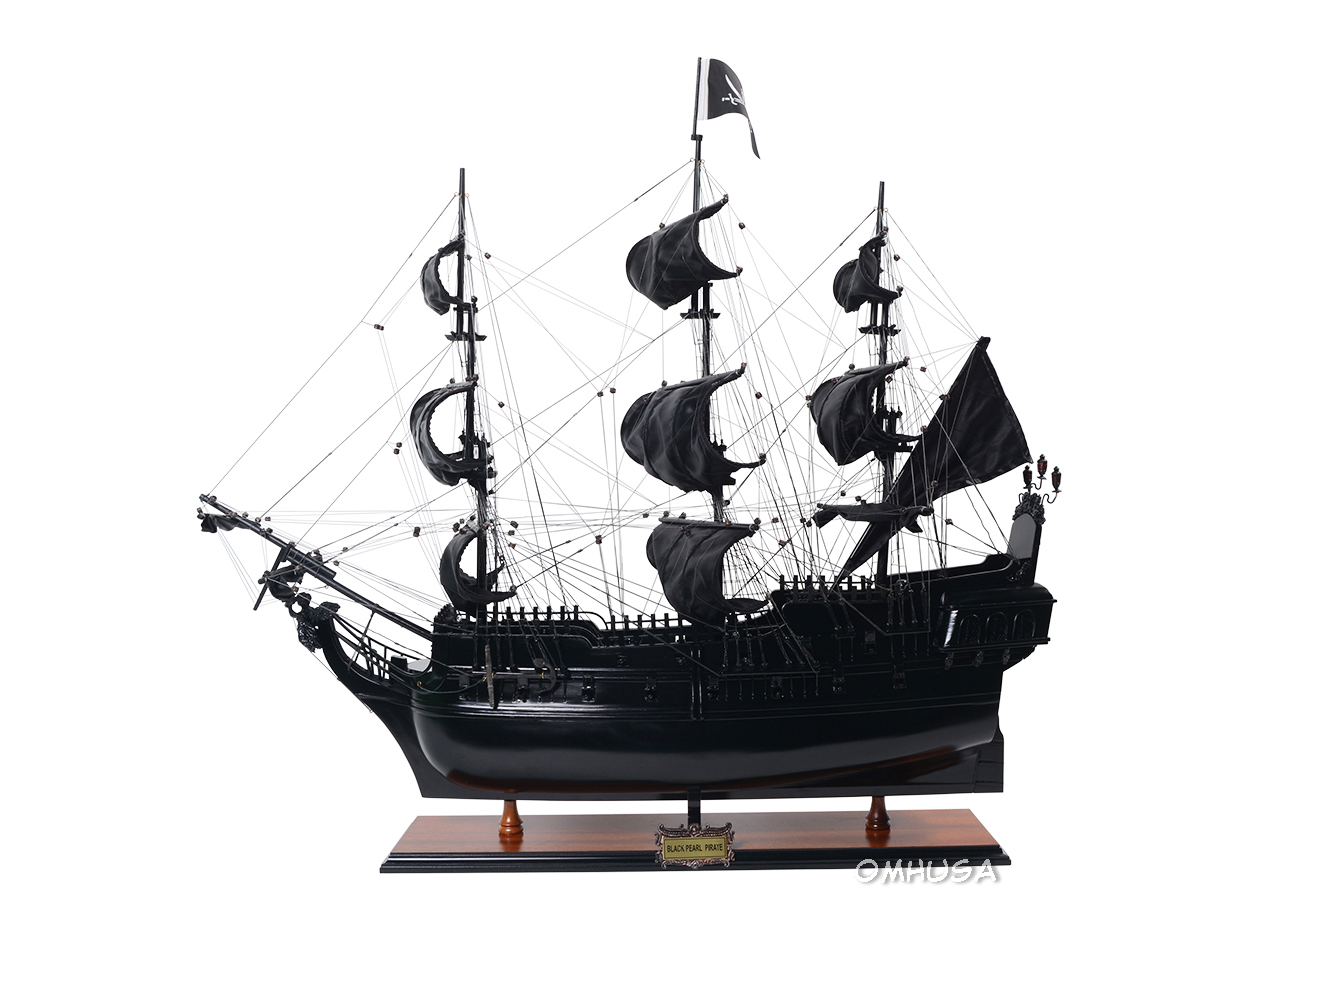 T295 Black Pearl Pirate Ship t295-black-pearl-pirate-ship-l01.jpg